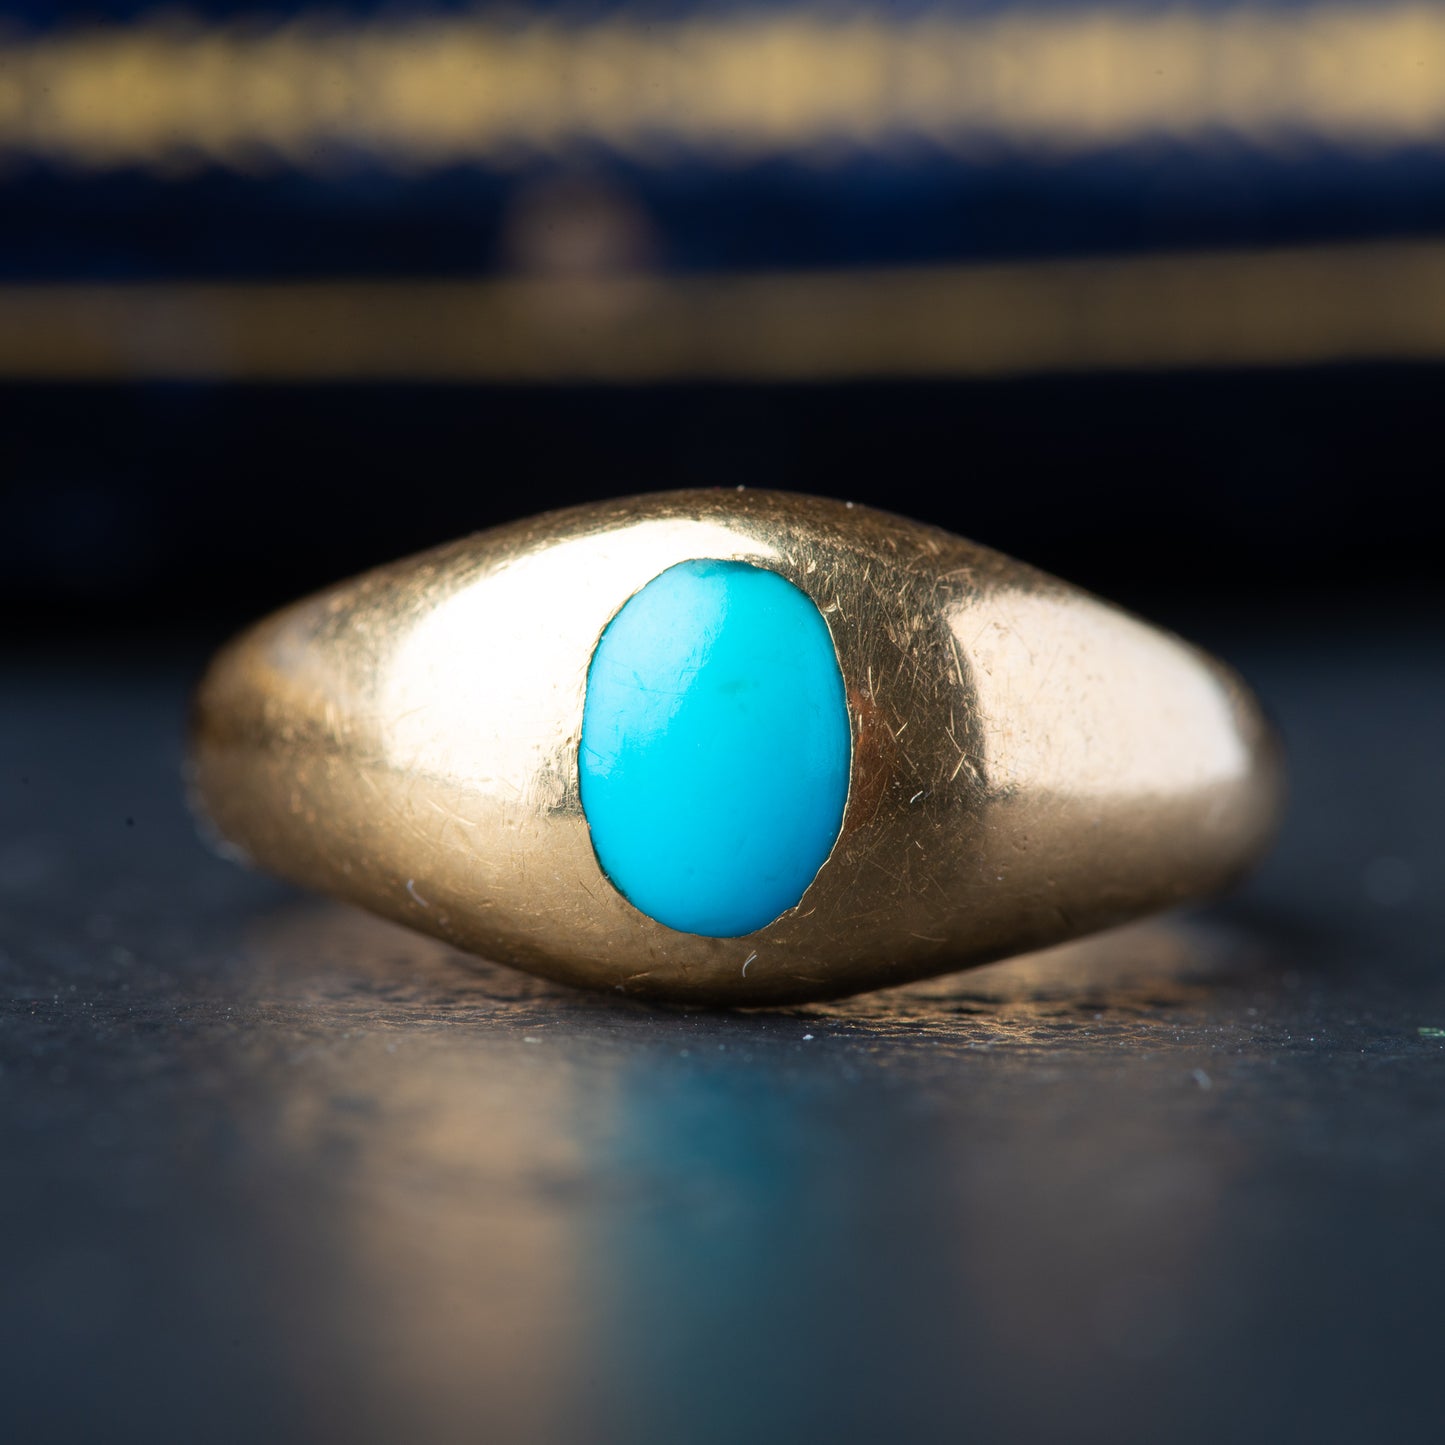 Antique Turquoise Ring